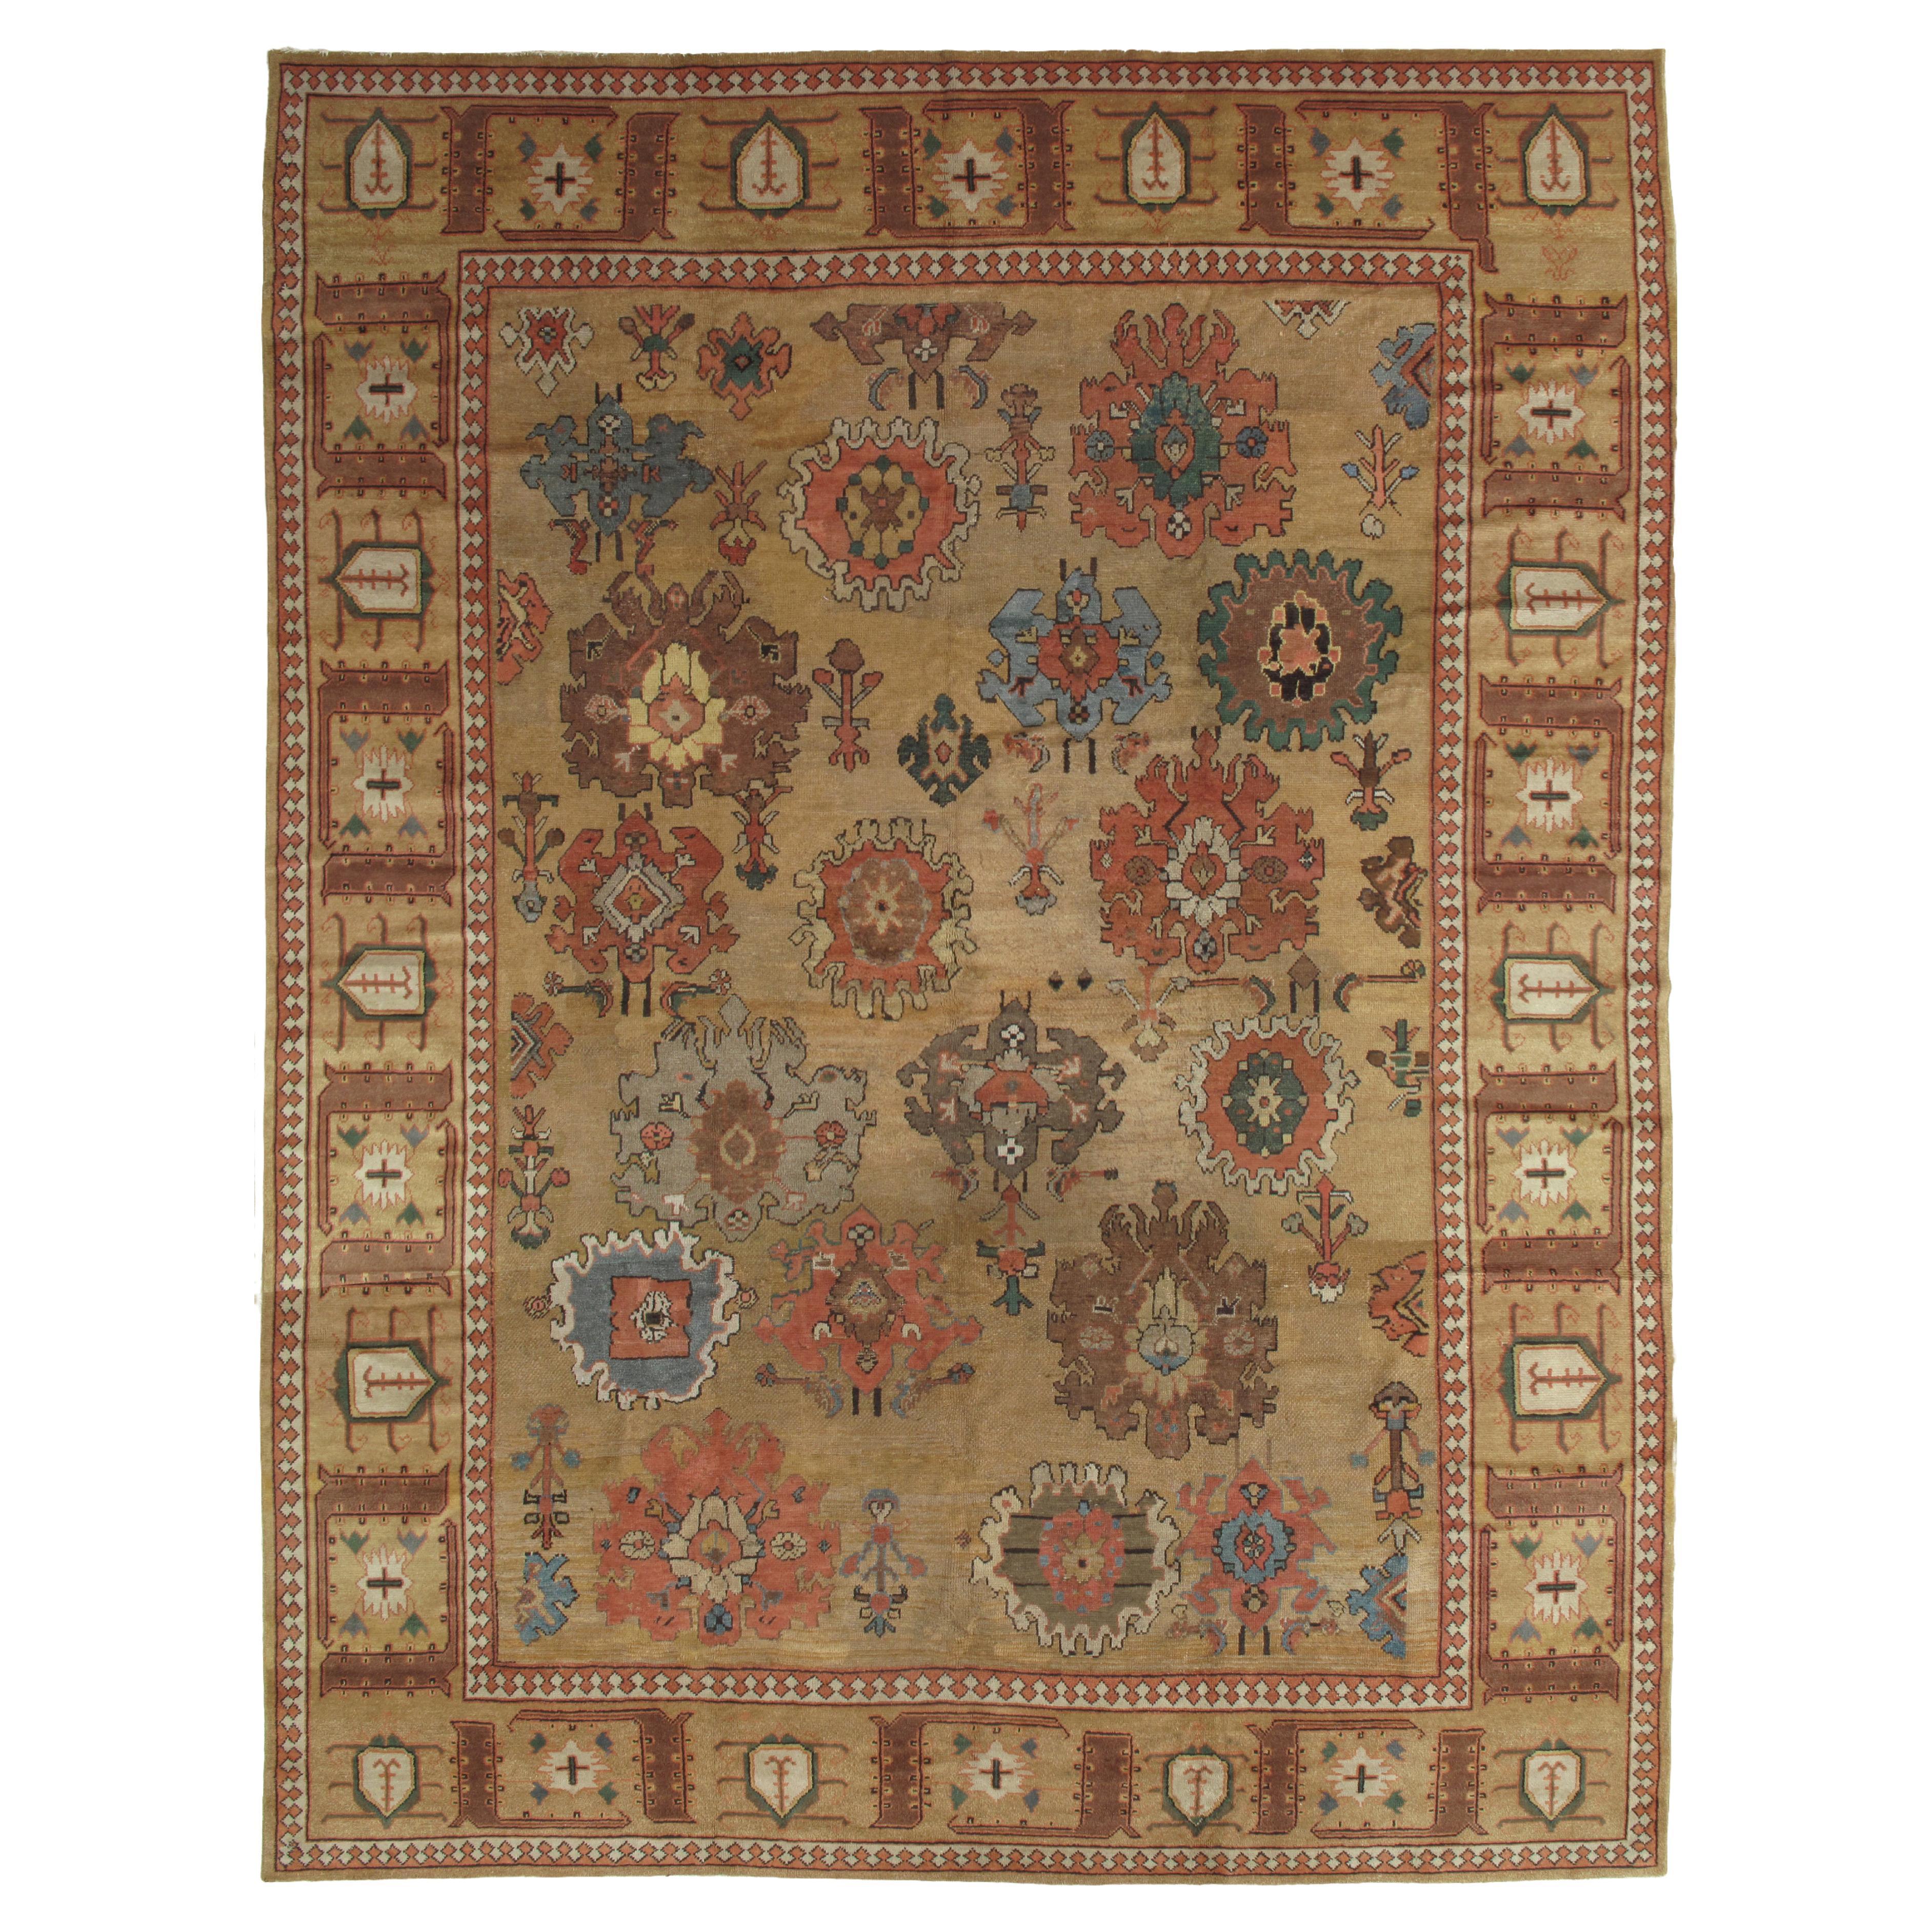 Antique Bakshaish Carpet, Oriental Persian Handmade in Tan Brown, Blue and Red